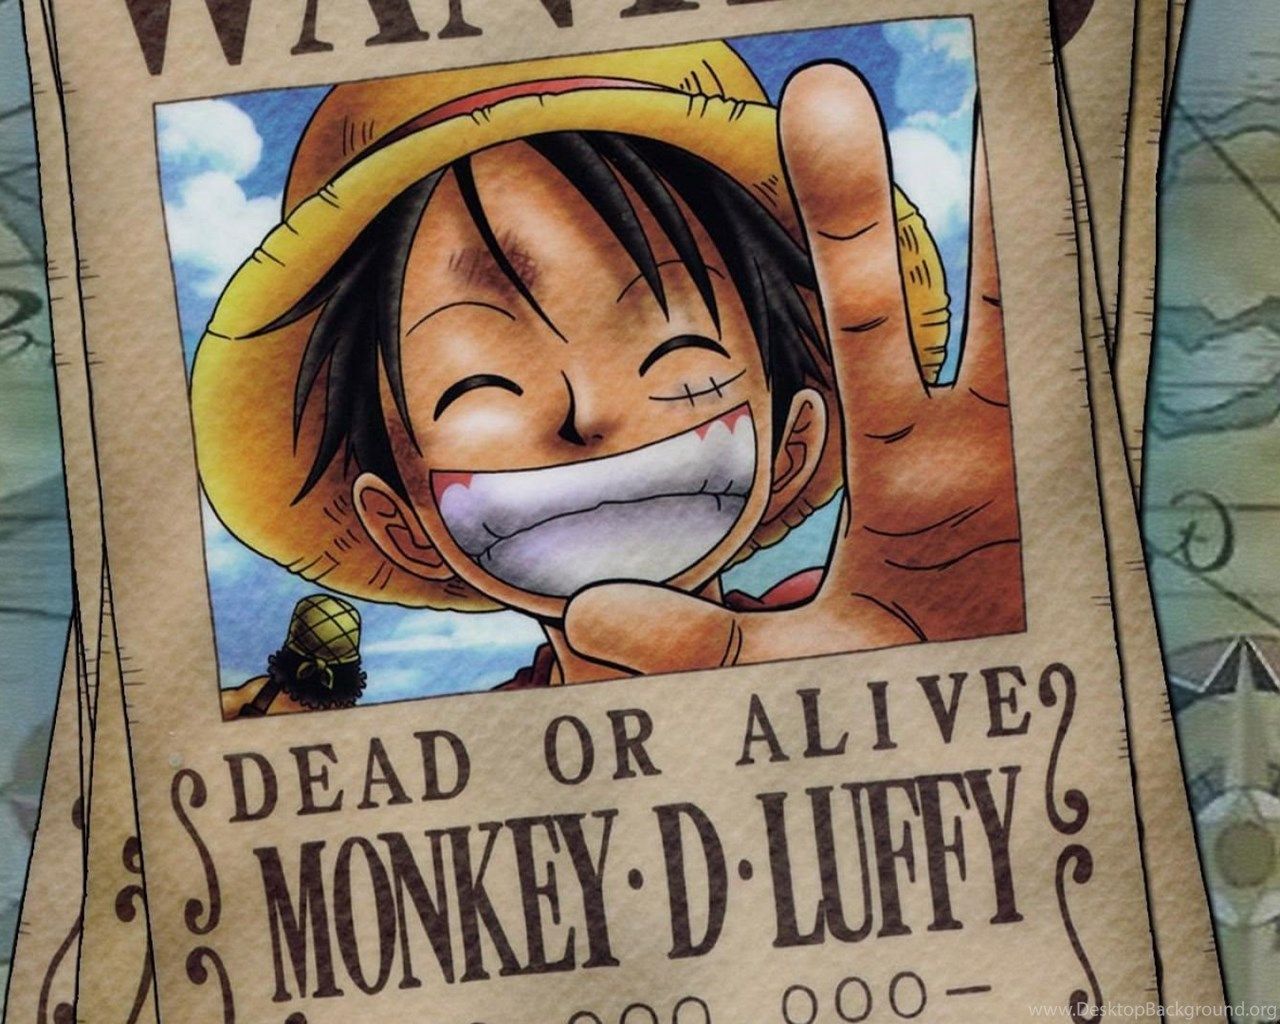 Monkey D. Luffy One Piece Wallpaper Anime Wallpaper Desktop Background